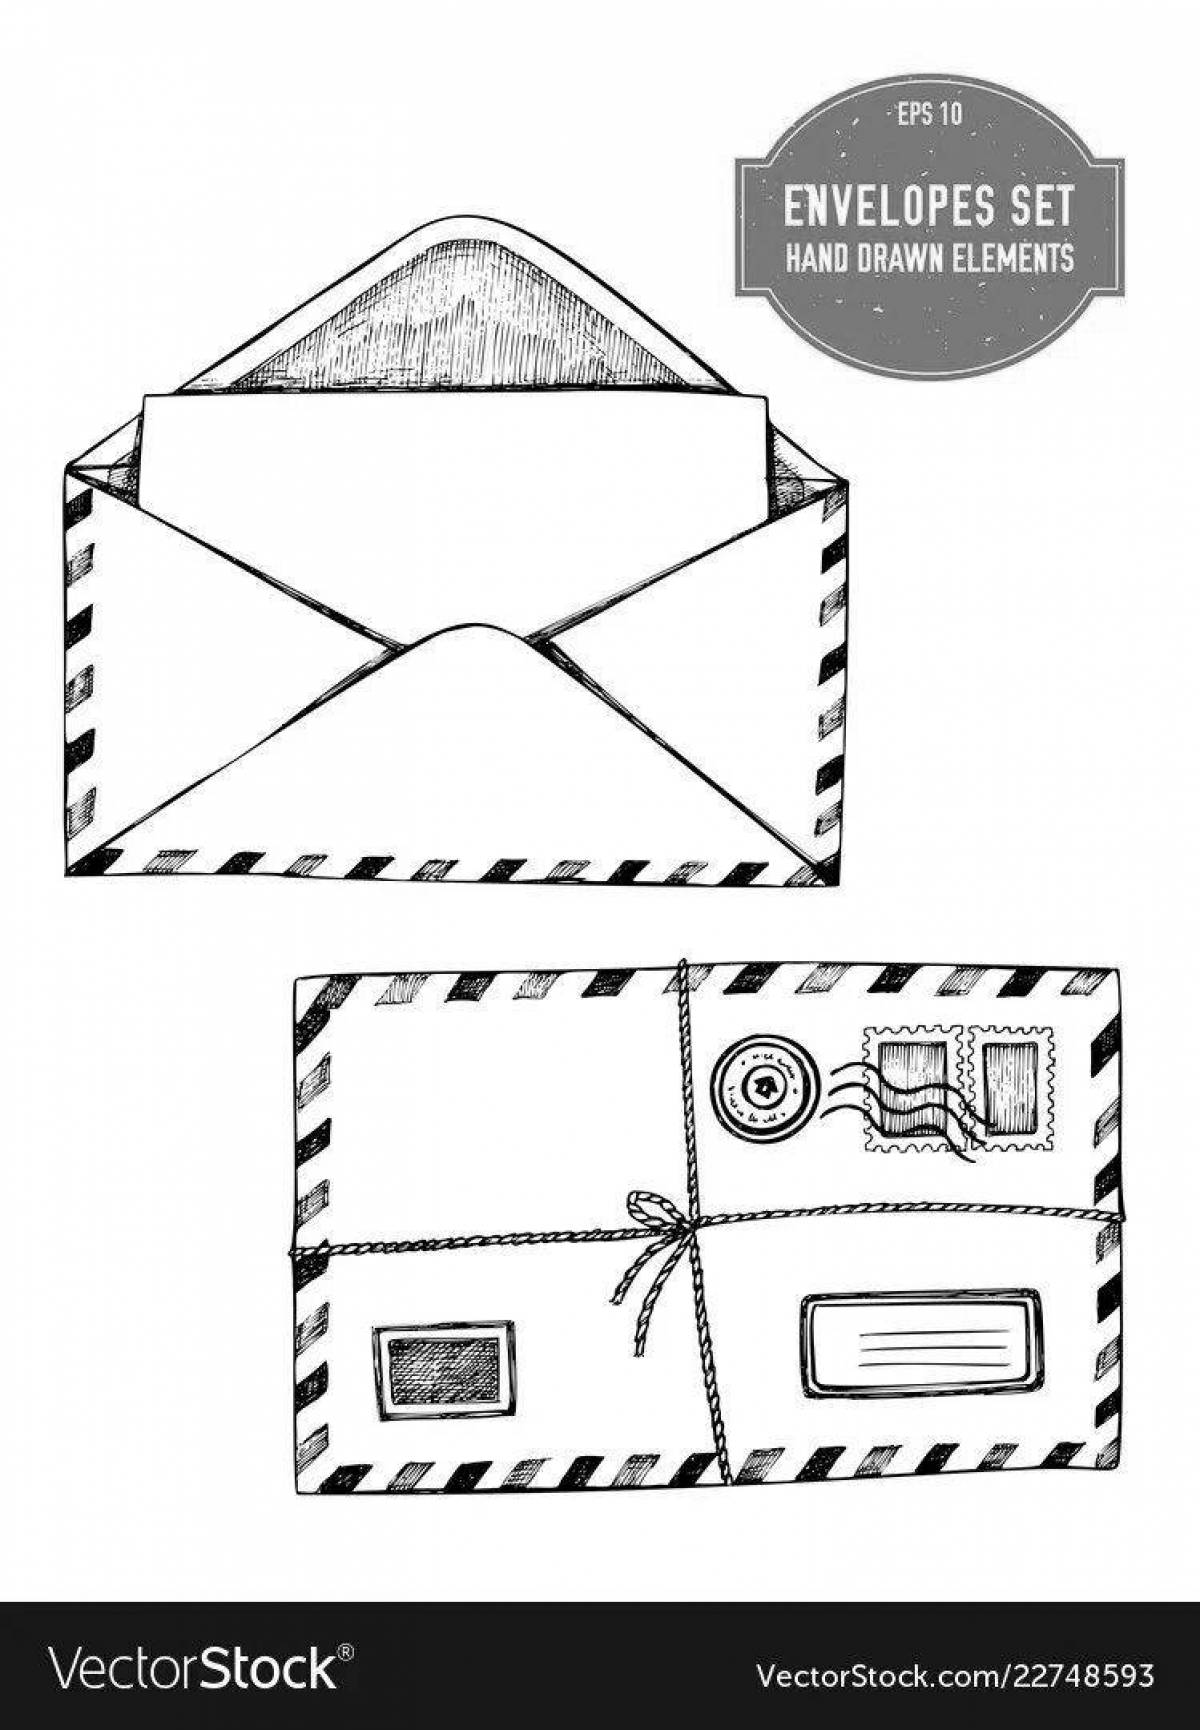 Sparkling envelope coloring page